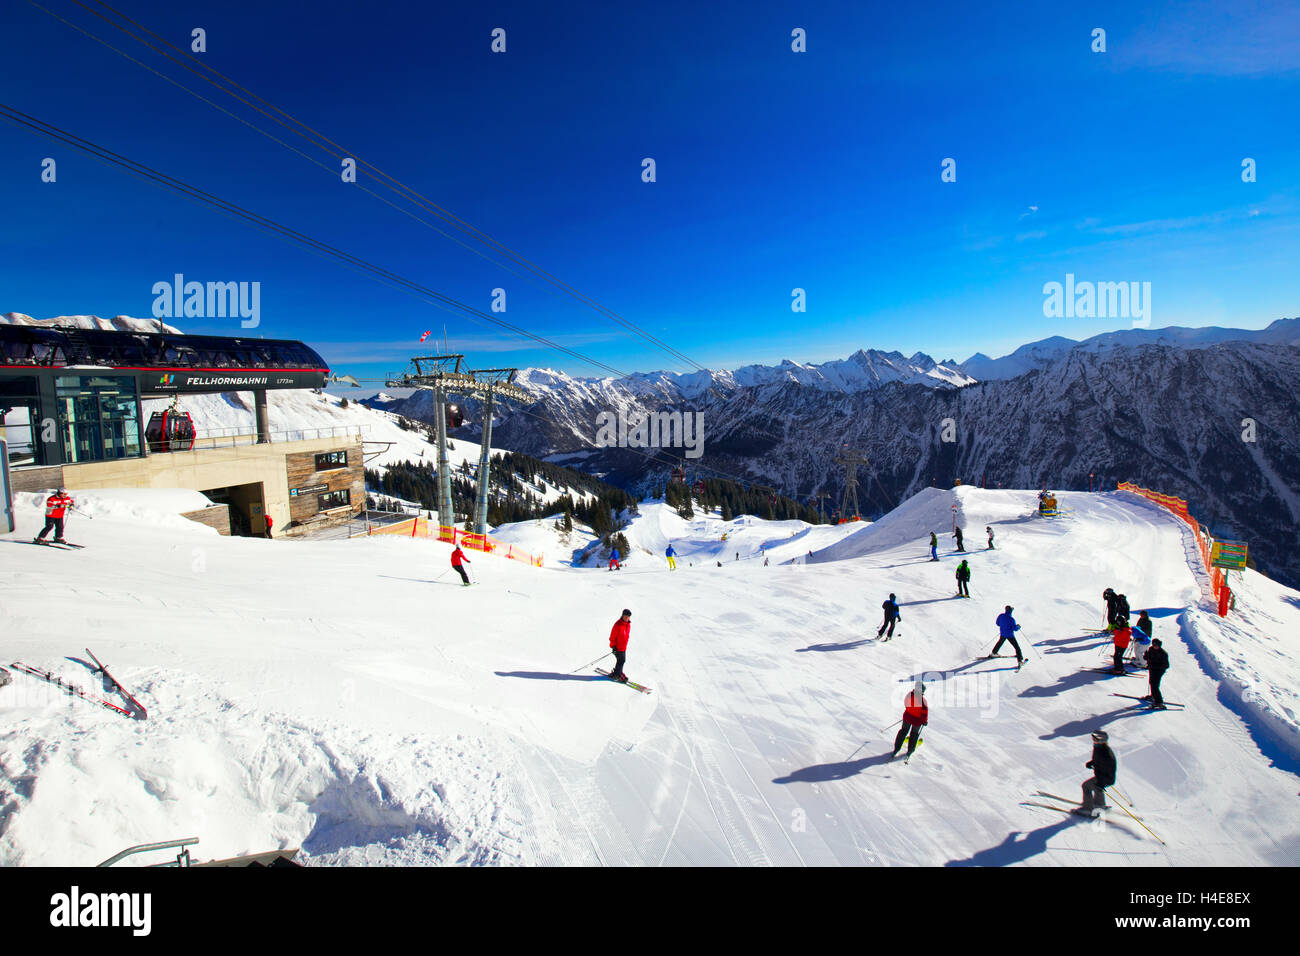 Piste da sci e seggiovie sulla sommità del Fellhorn Ski Resort, Alpi Bavaresi, Oberstdorf, Germania Foto Stock